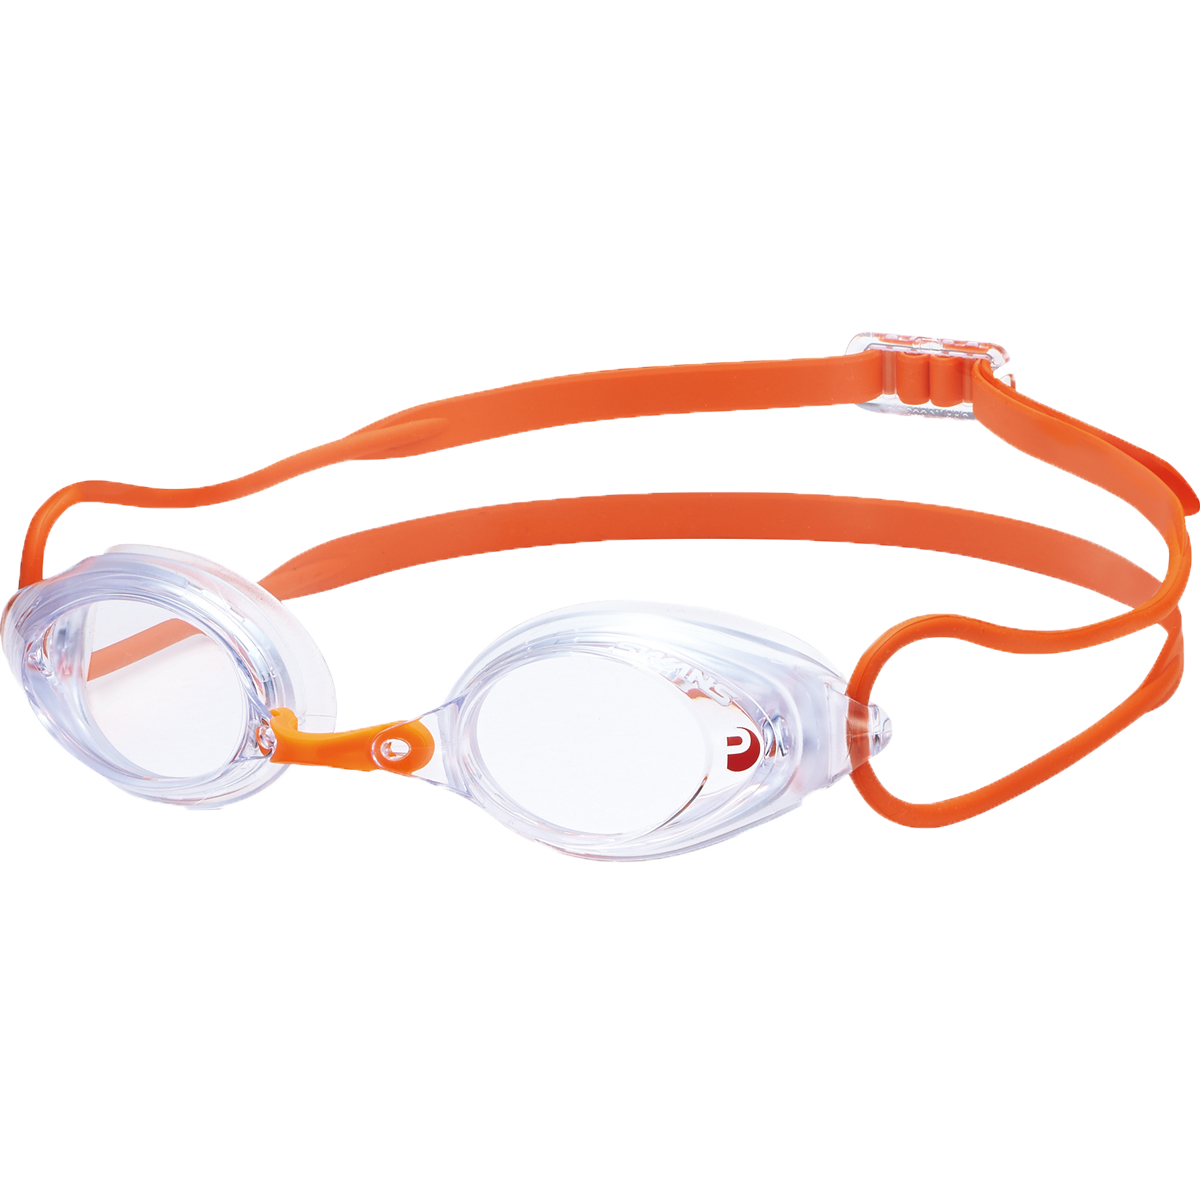 SRX Goggles Orange/Clear